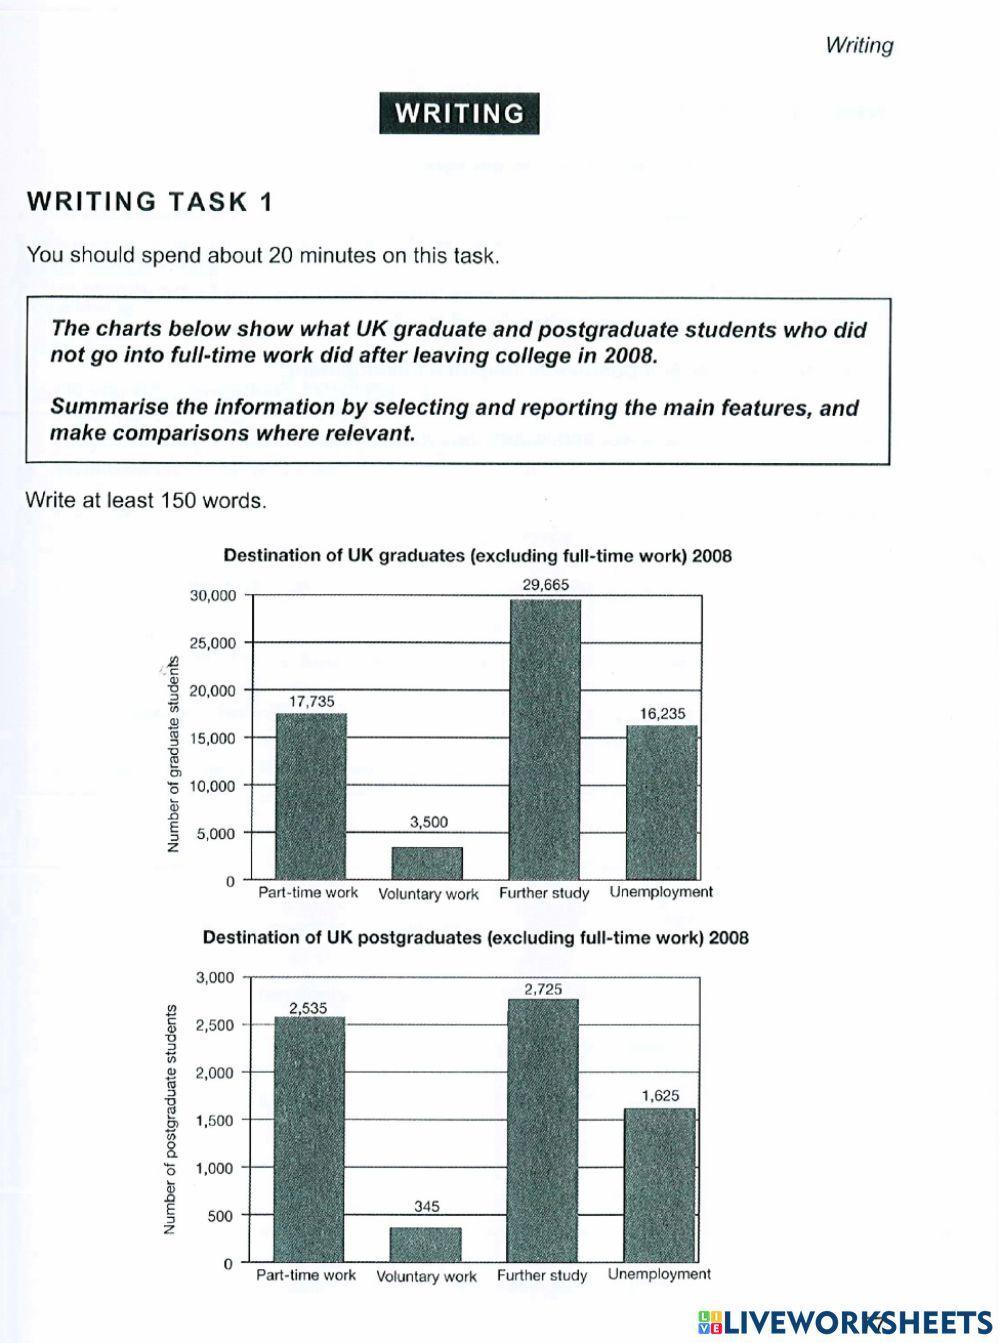 IELTS - Writing Task 1